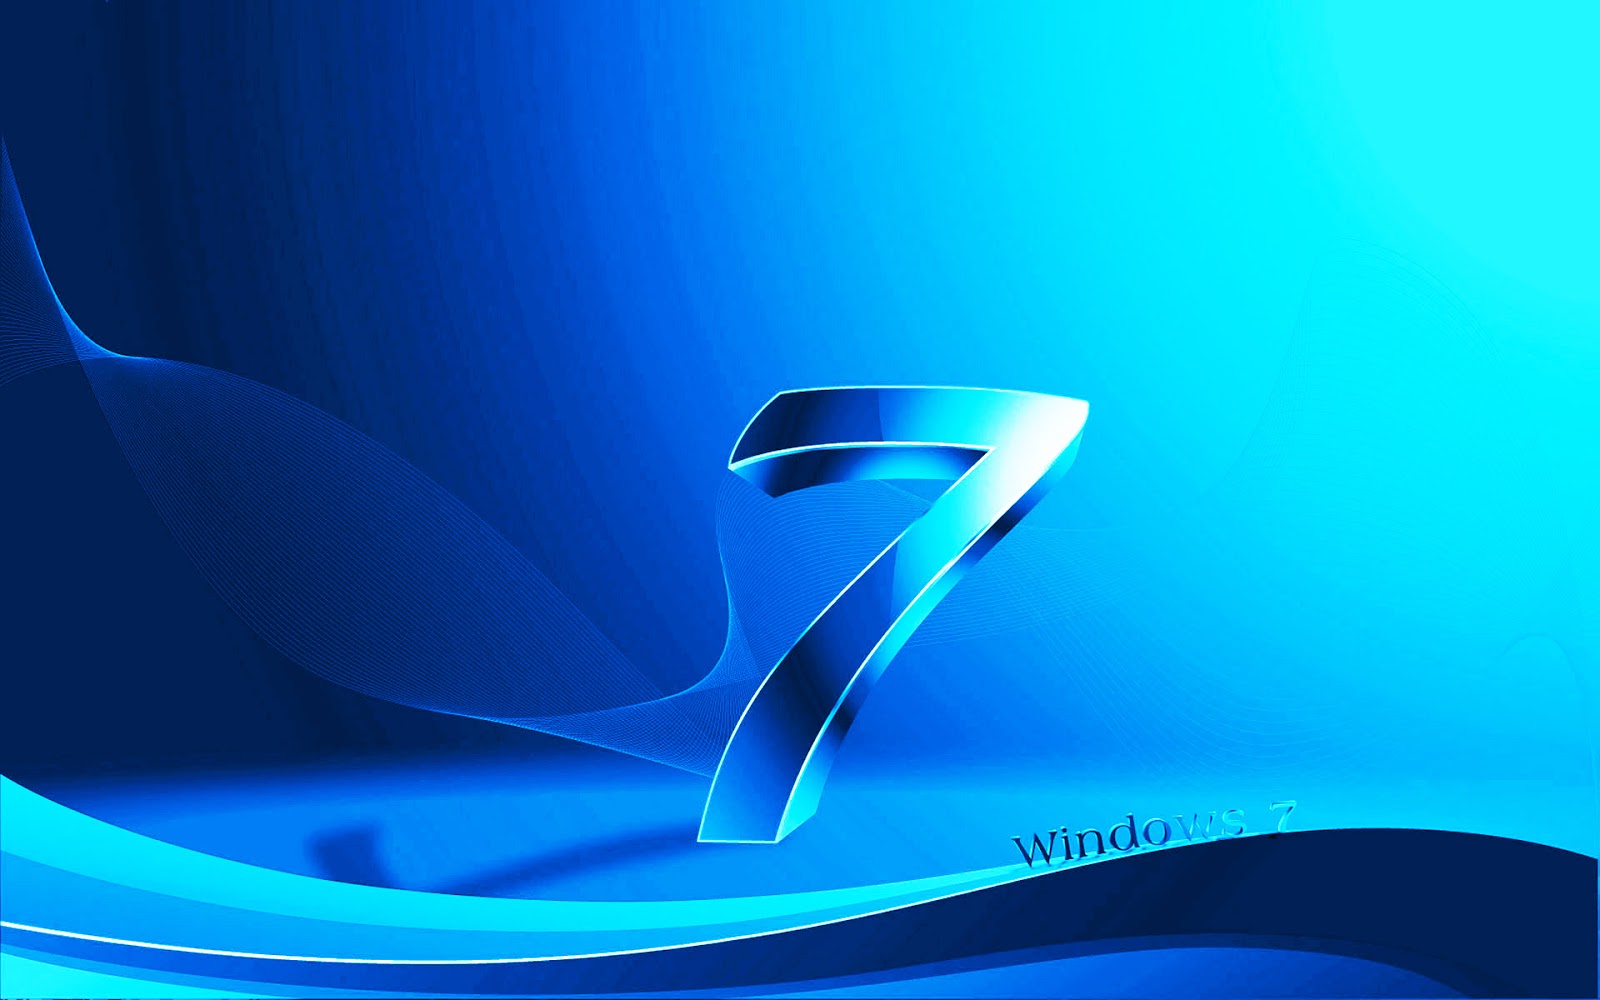 Wallpaper Windows 7 3d Carckit Image Num 43